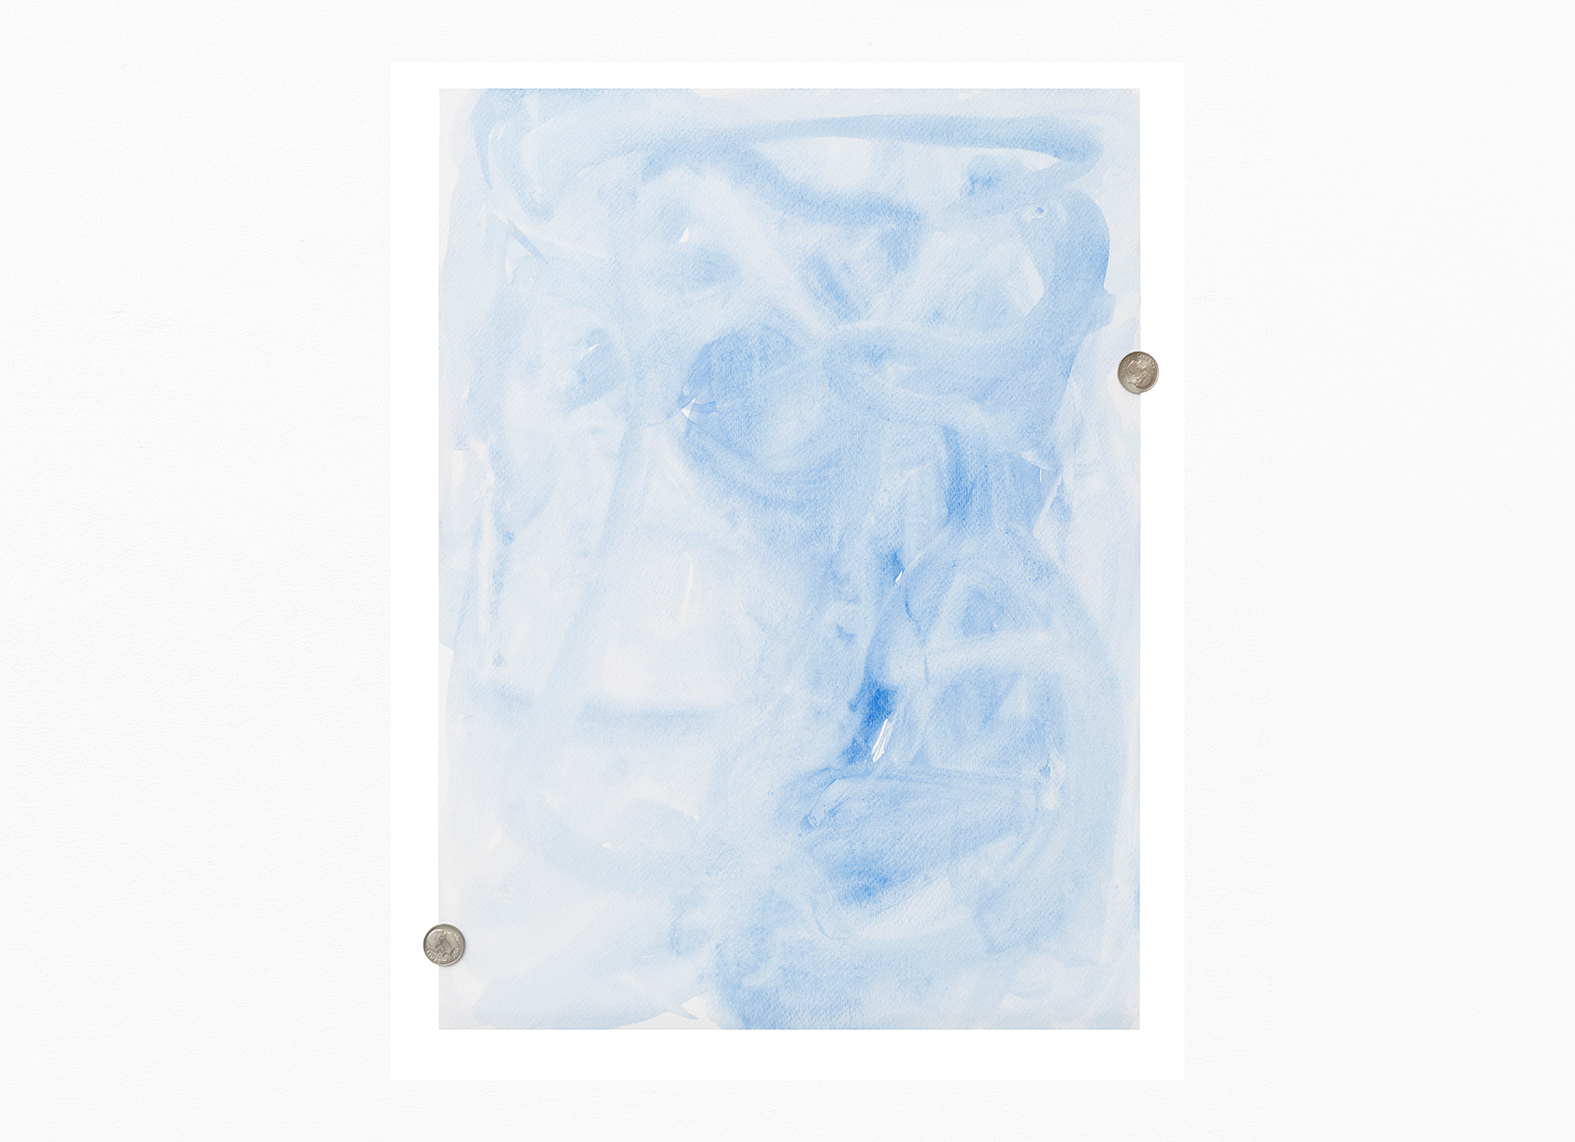 Monika Baer, face up, Cobalt blue, acrylic, coins, 41.2 Ã— 30 cm, 2021/ Photo: Cedric Mussano / Courtesy of the artist, Kirchgasse, Steckborn and Galerie Barbara Weiss, Berlin